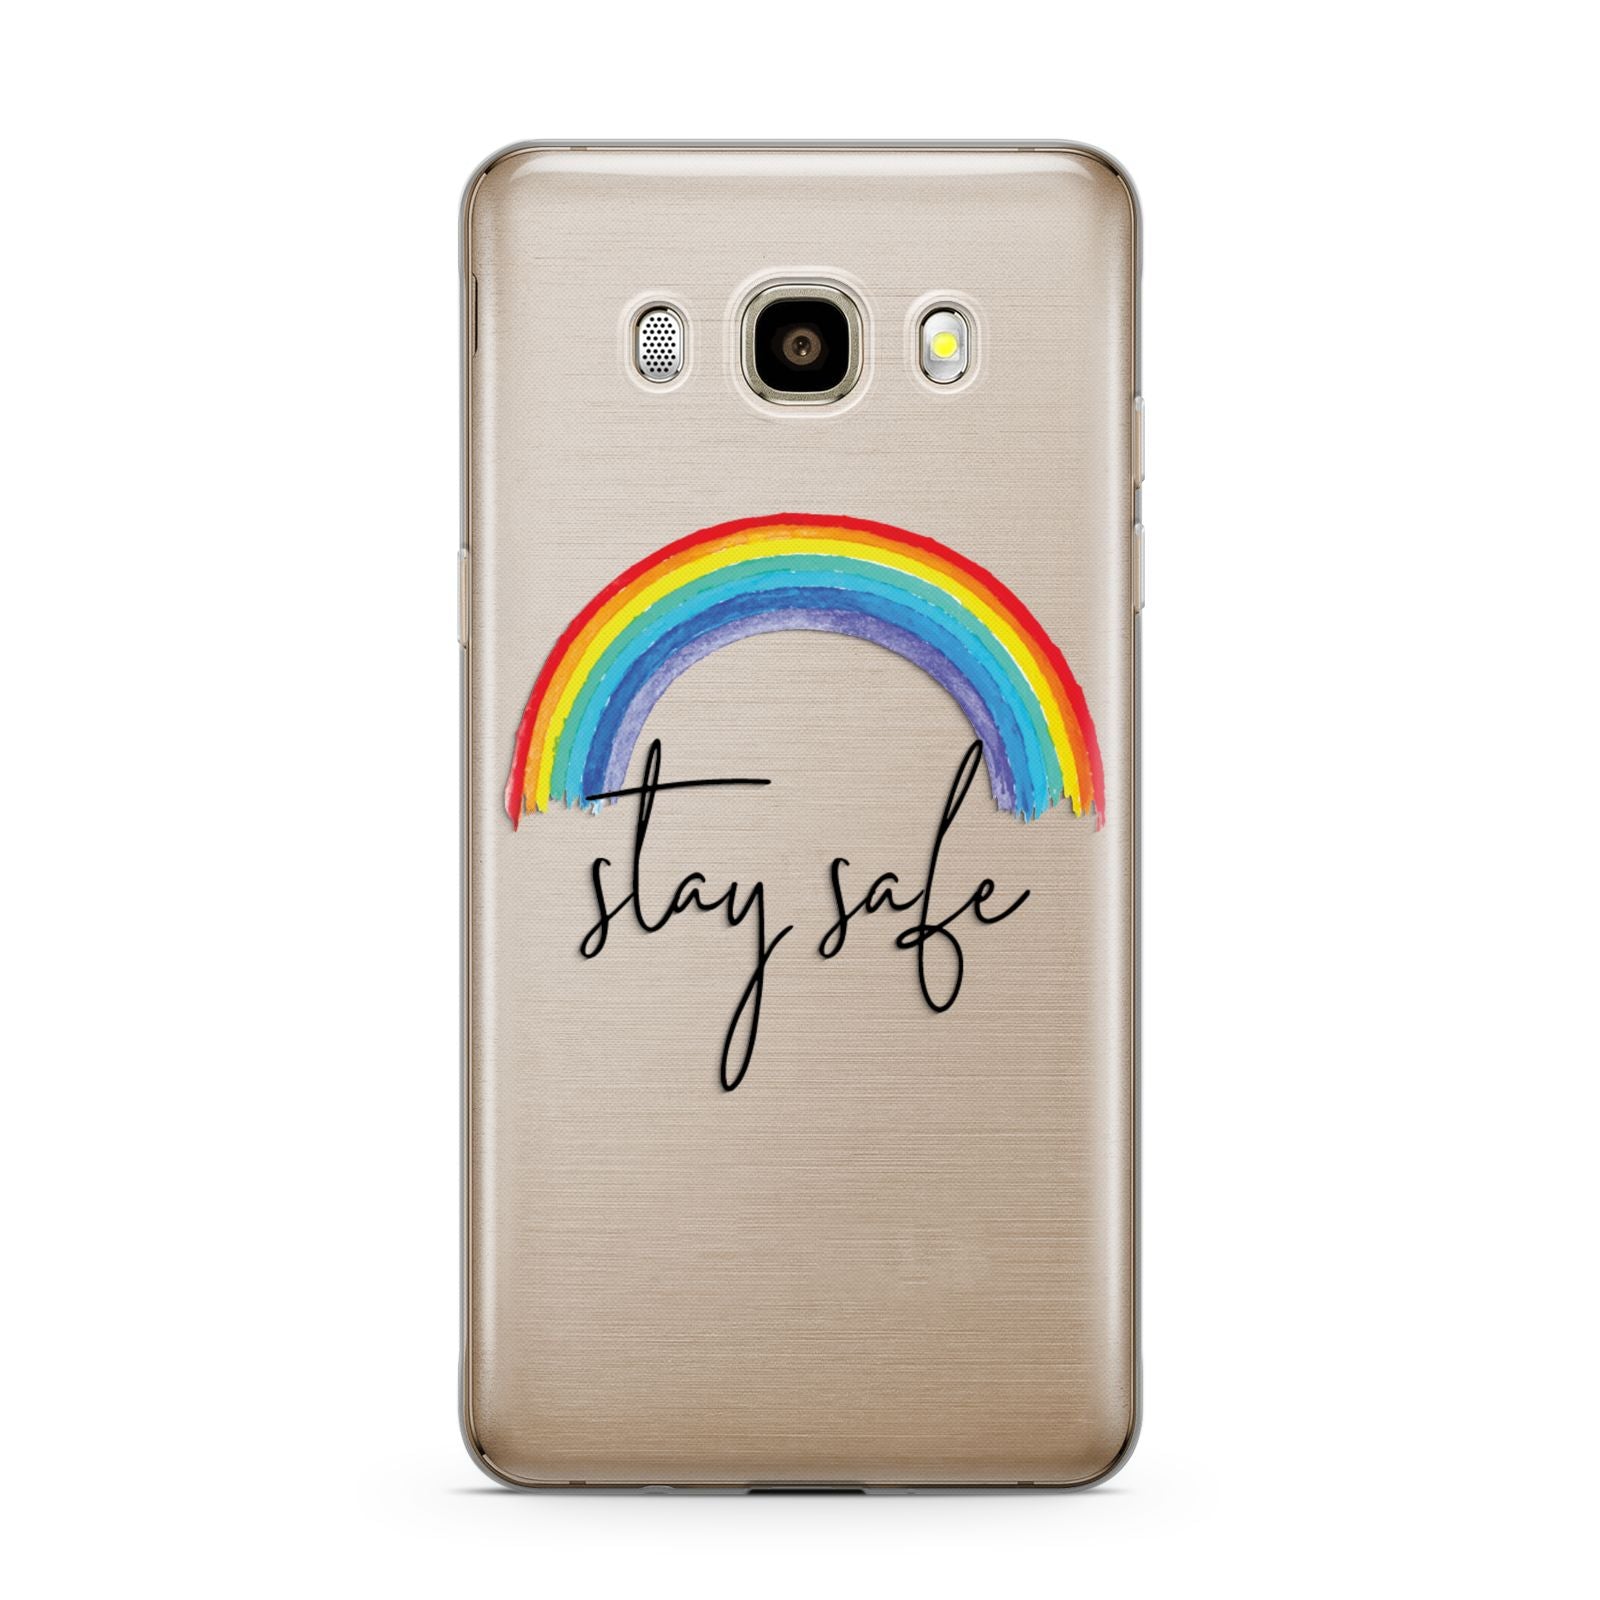 Stay Safe Rainbow Samsung Galaxy J7 2016 Case on gold phone